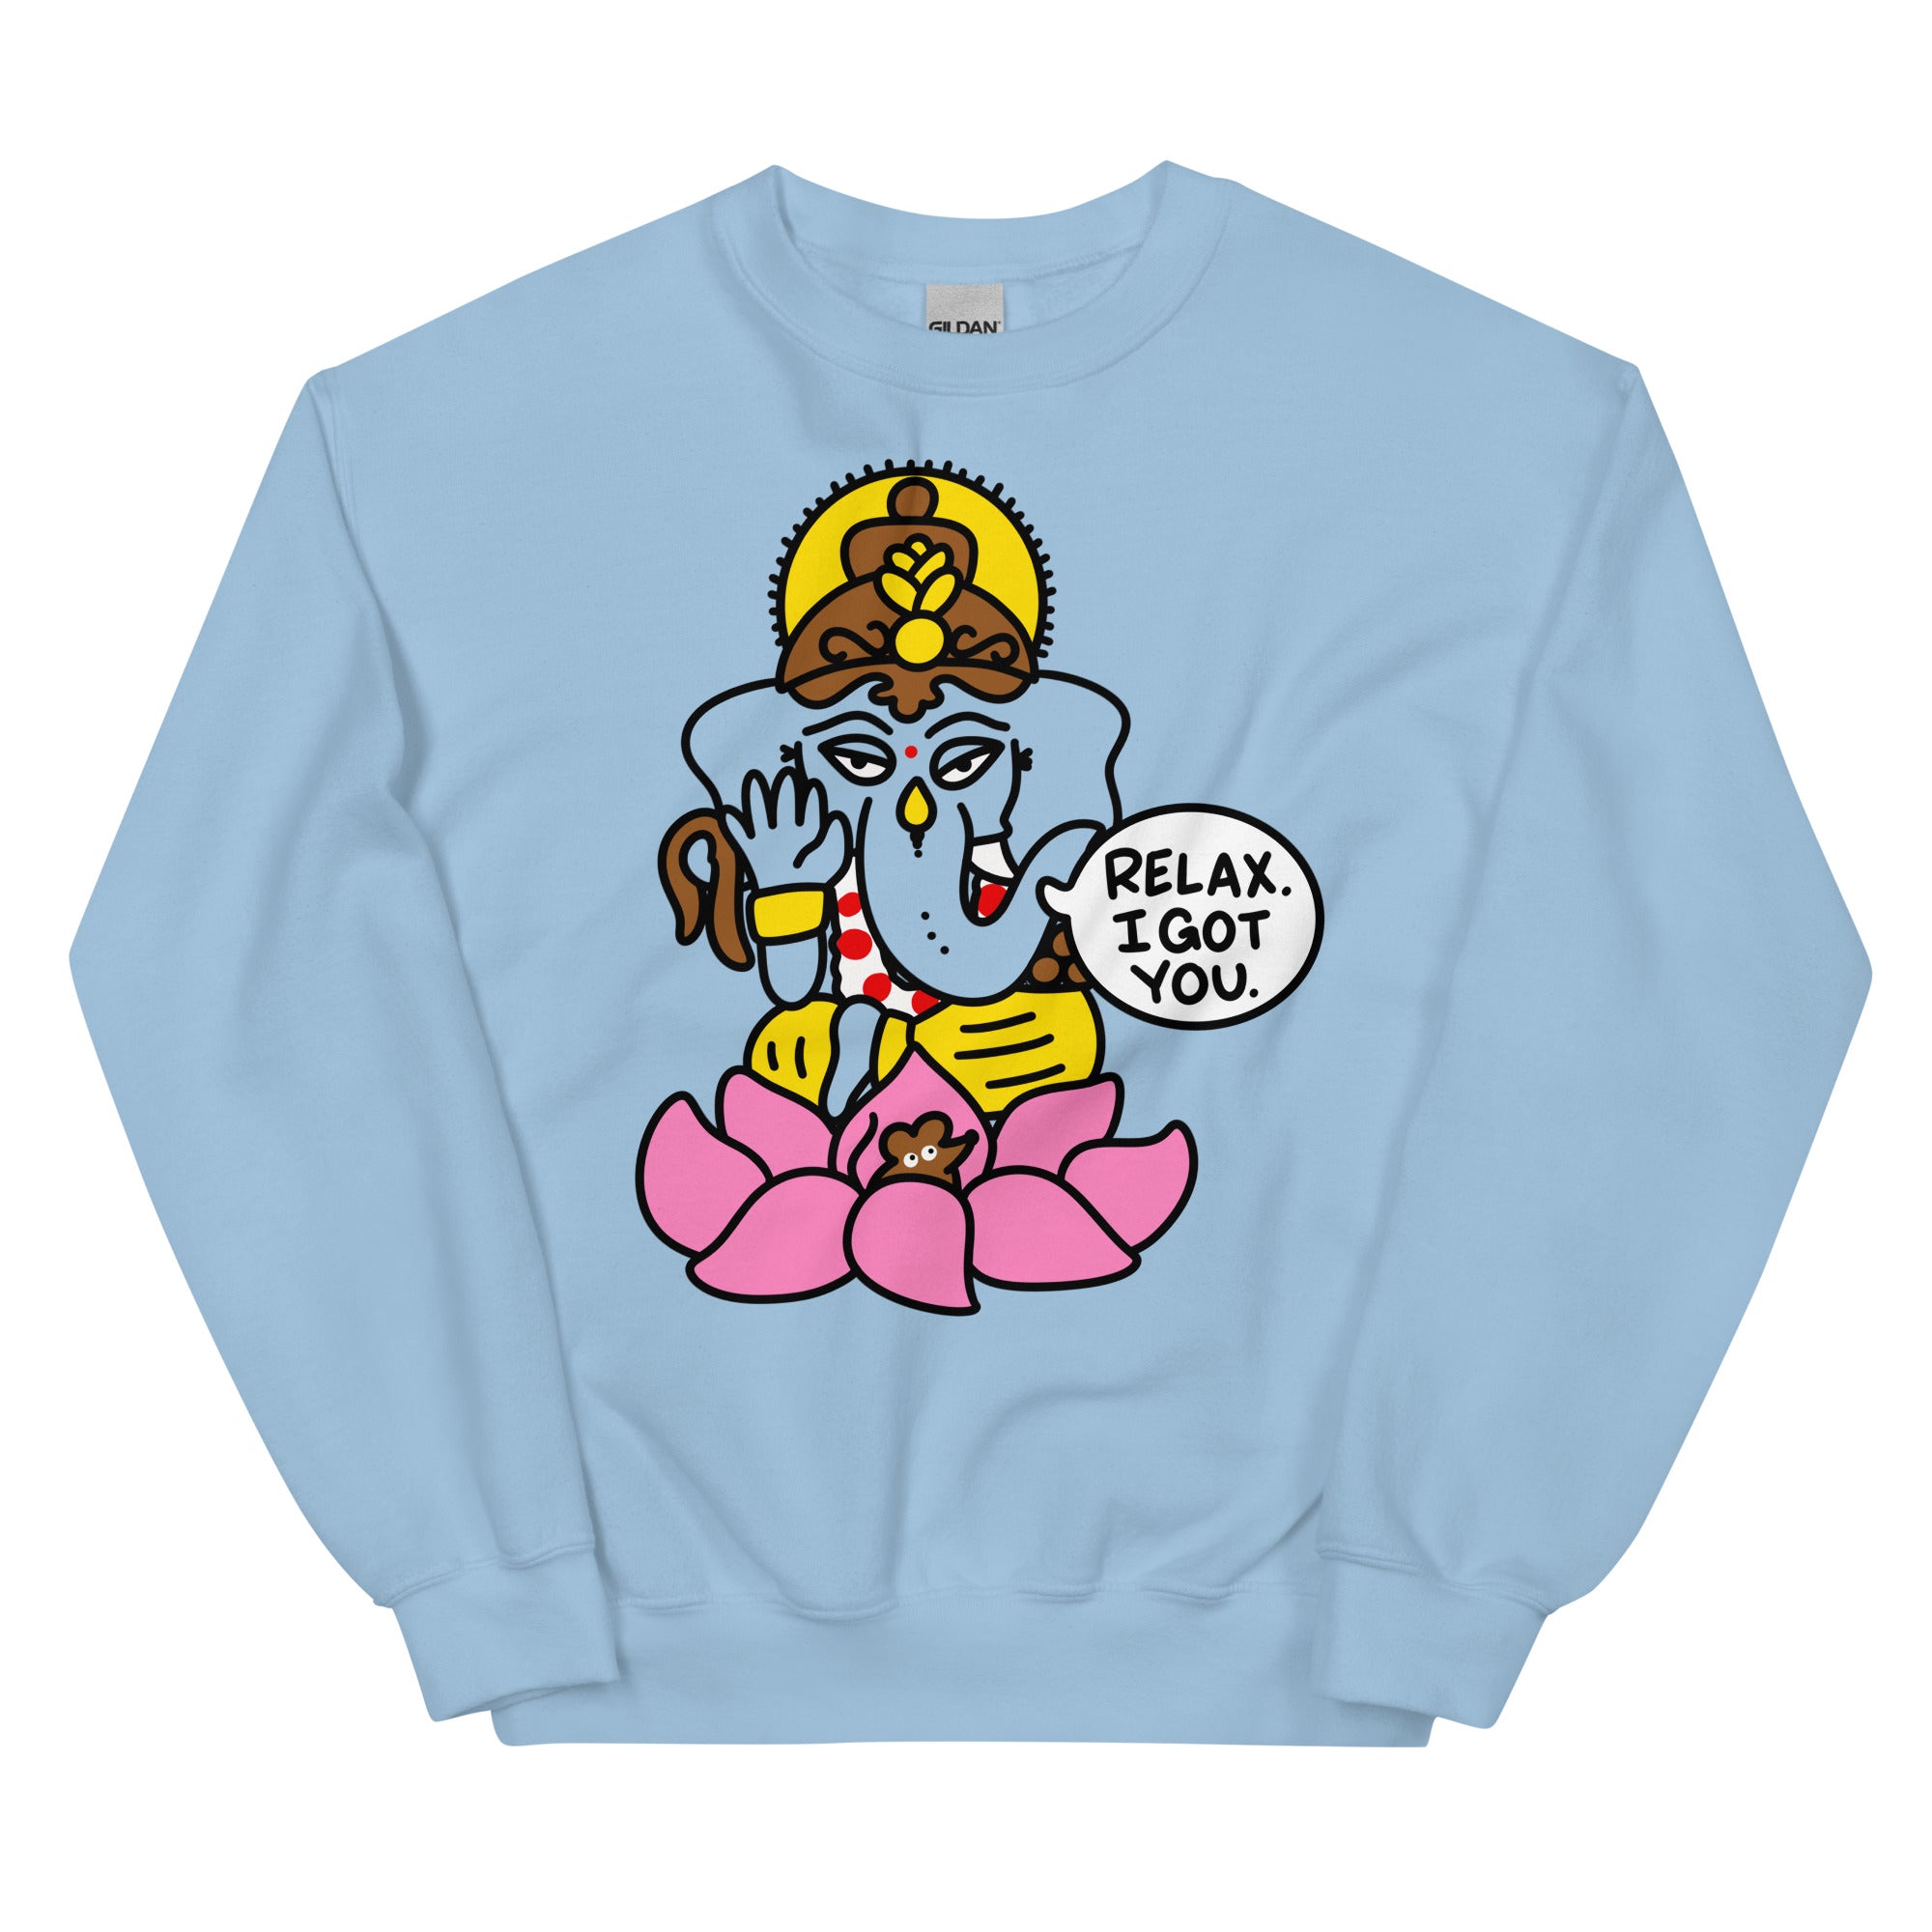 Ganesh sweatshirt for Happy Diwali, Hindu Temple Ganapati Elephant shirt Lord Ganesha Nameste Meditation shirt